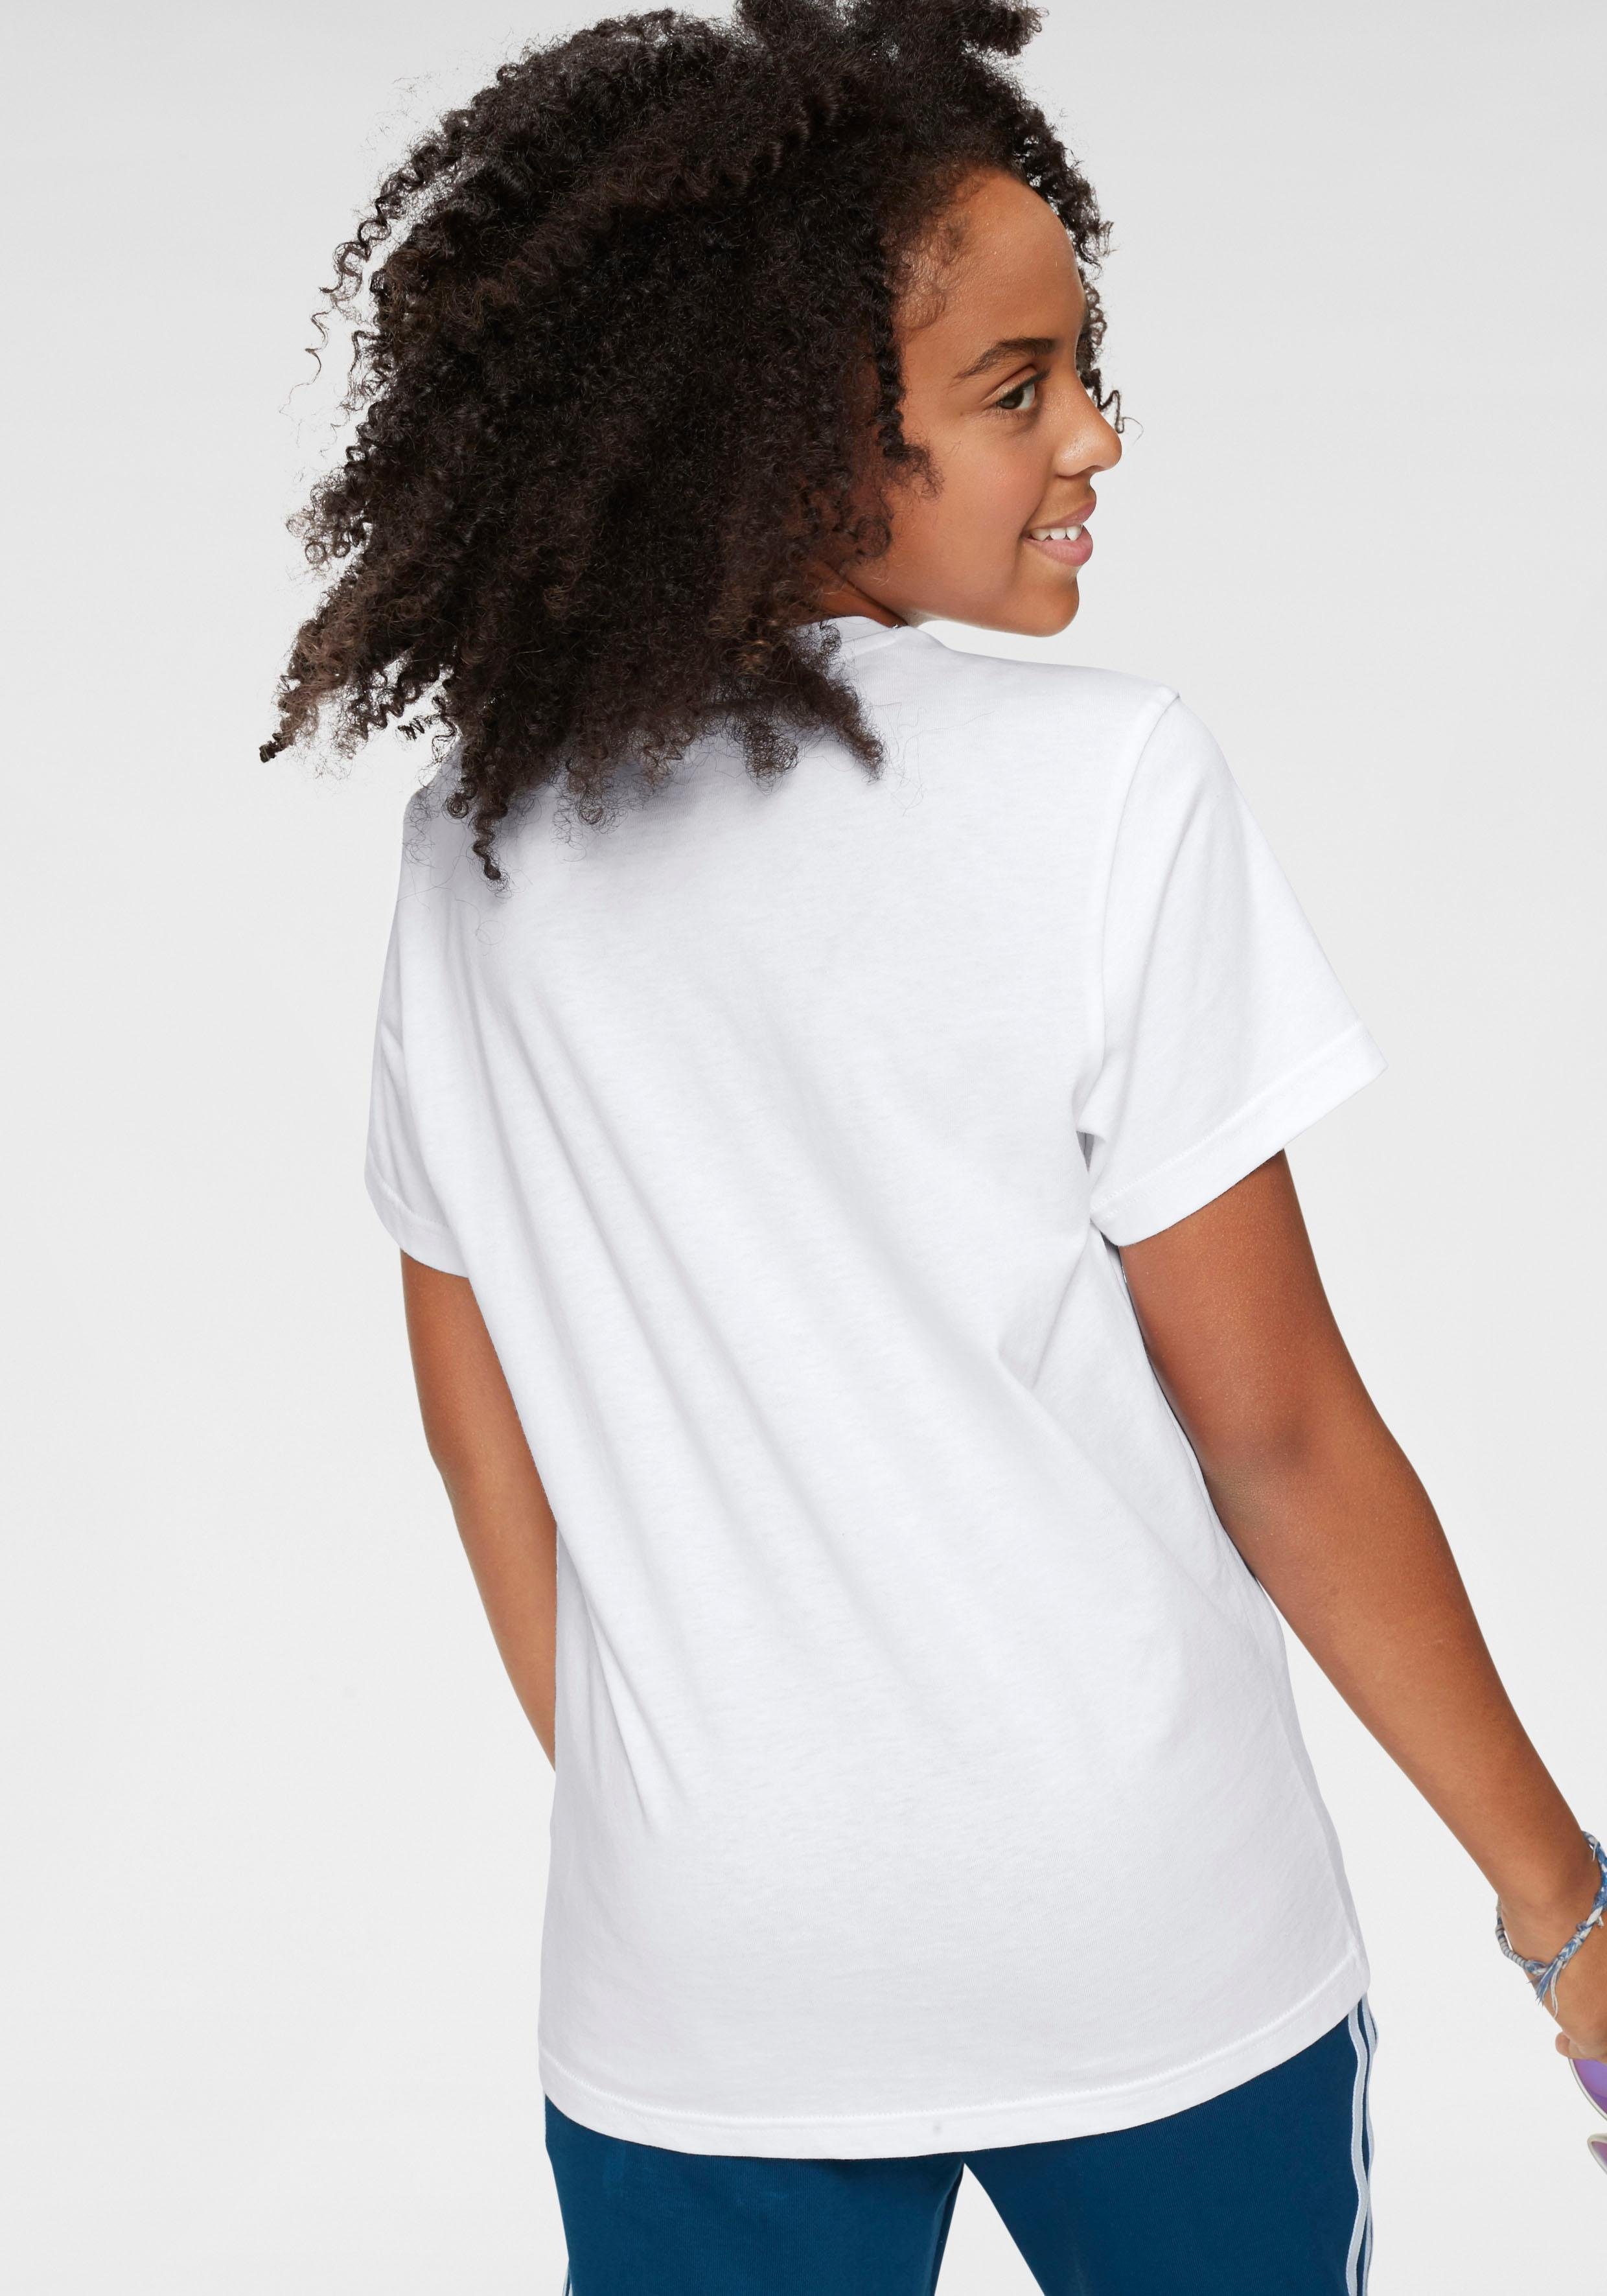 Unisex Black TEE / Originals adidas TREFOIL T-Shirt White